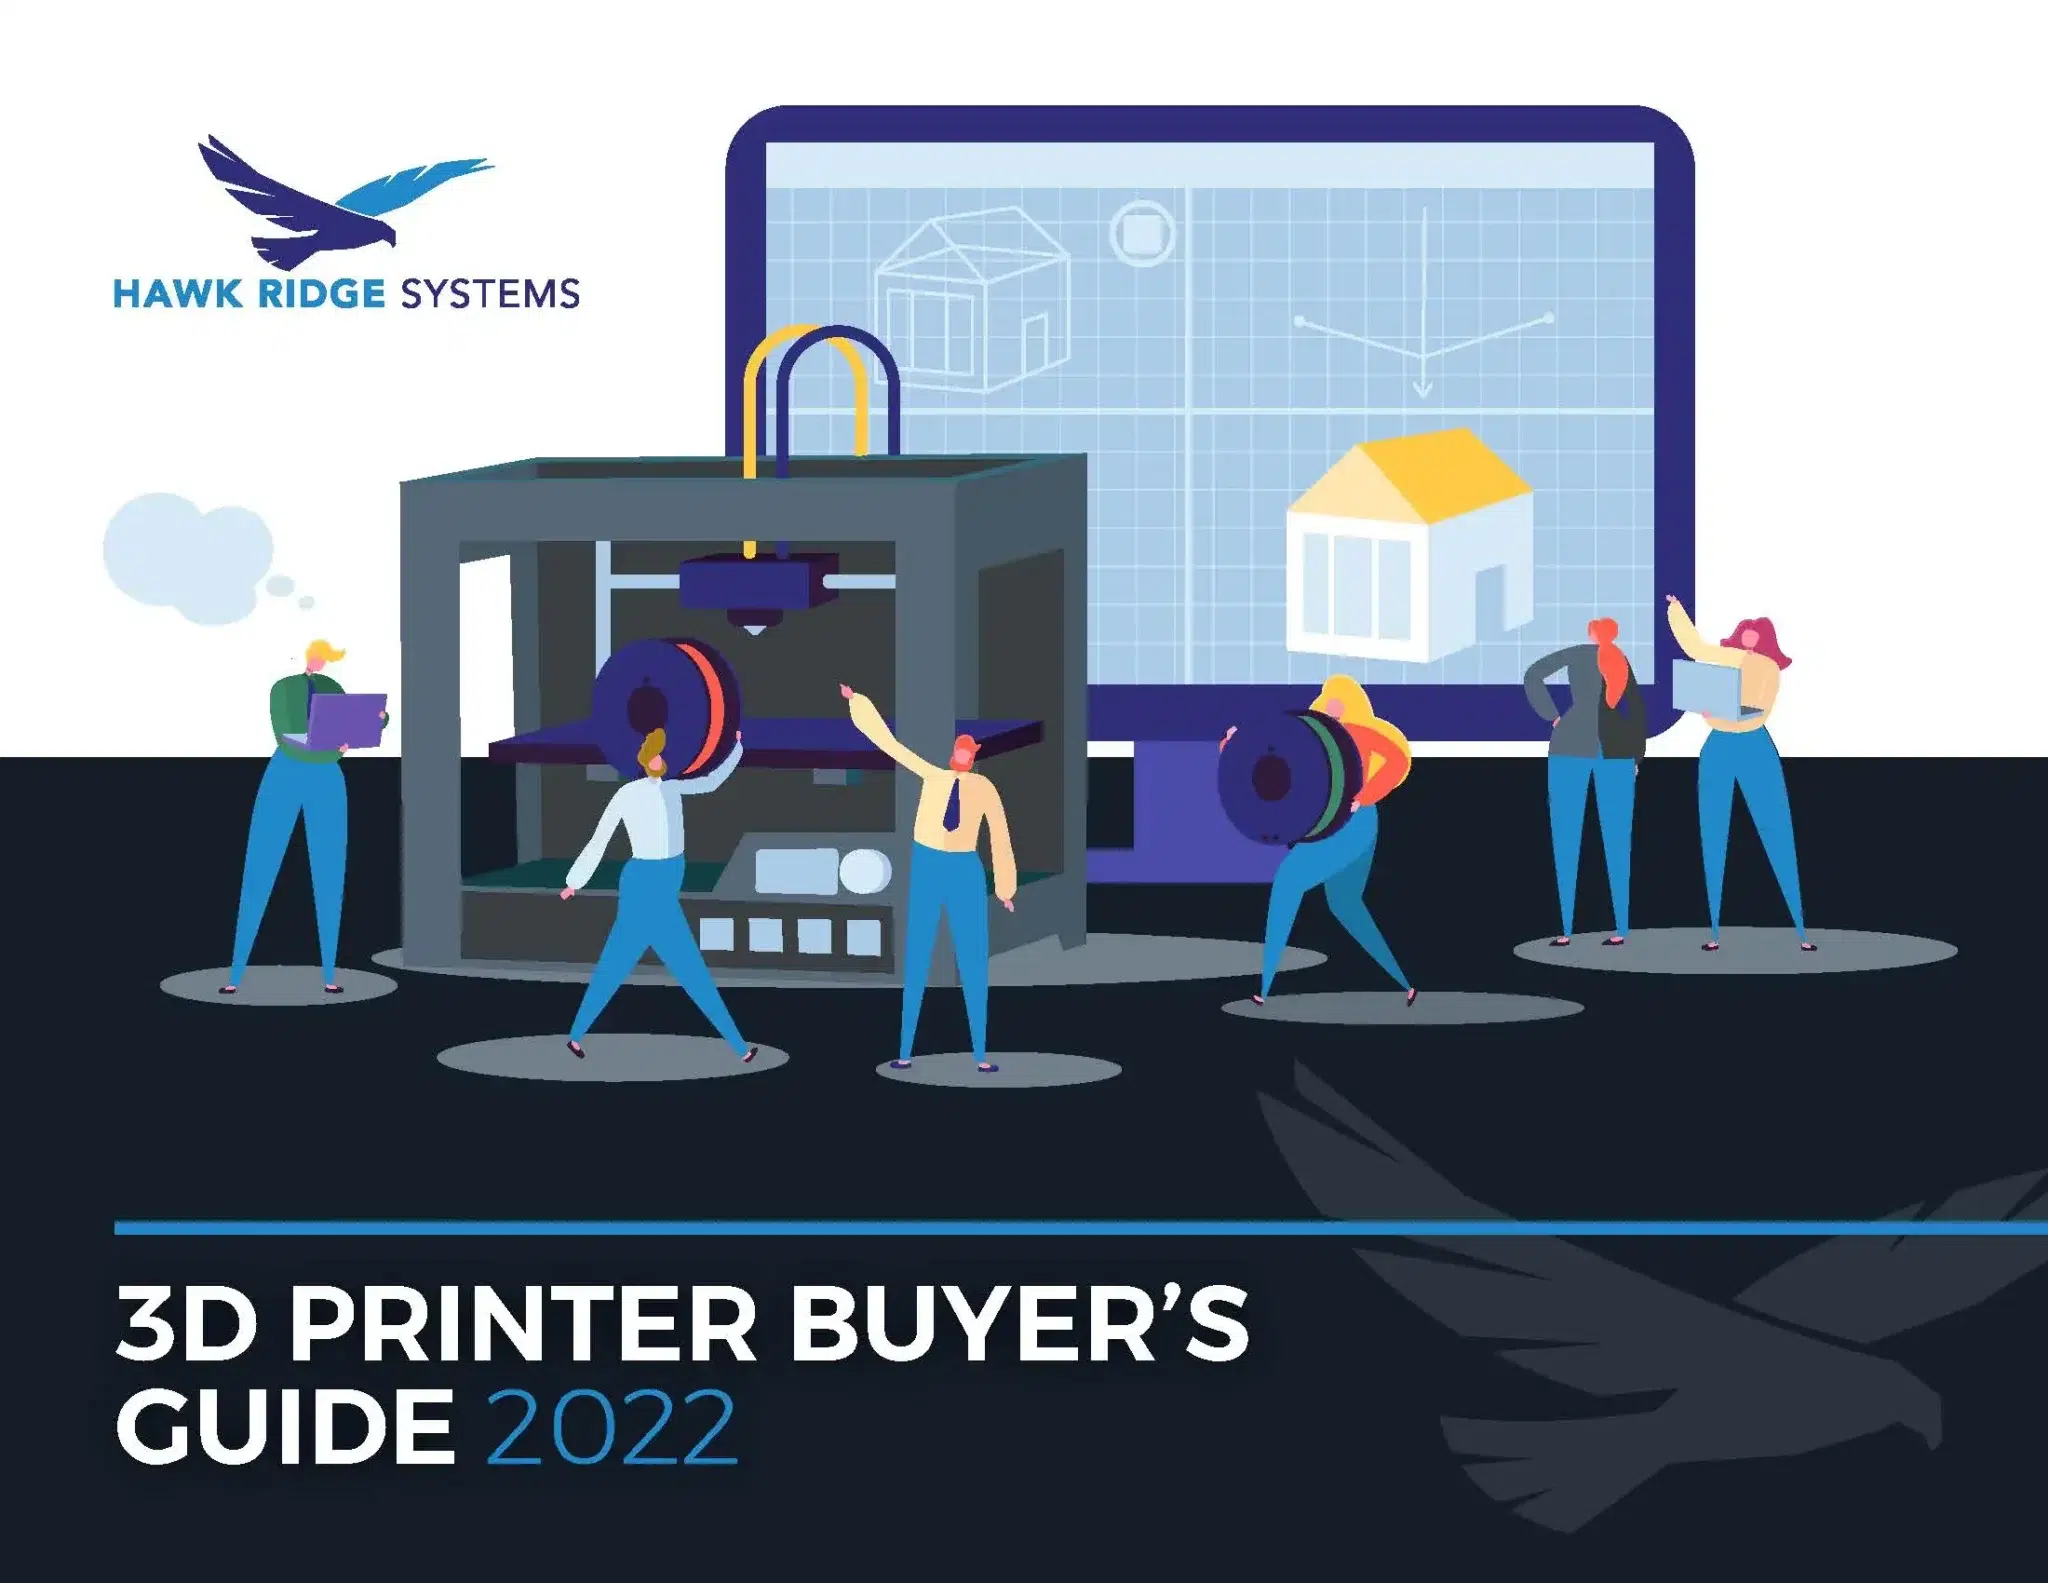 3D Printer Buyer’s Guide